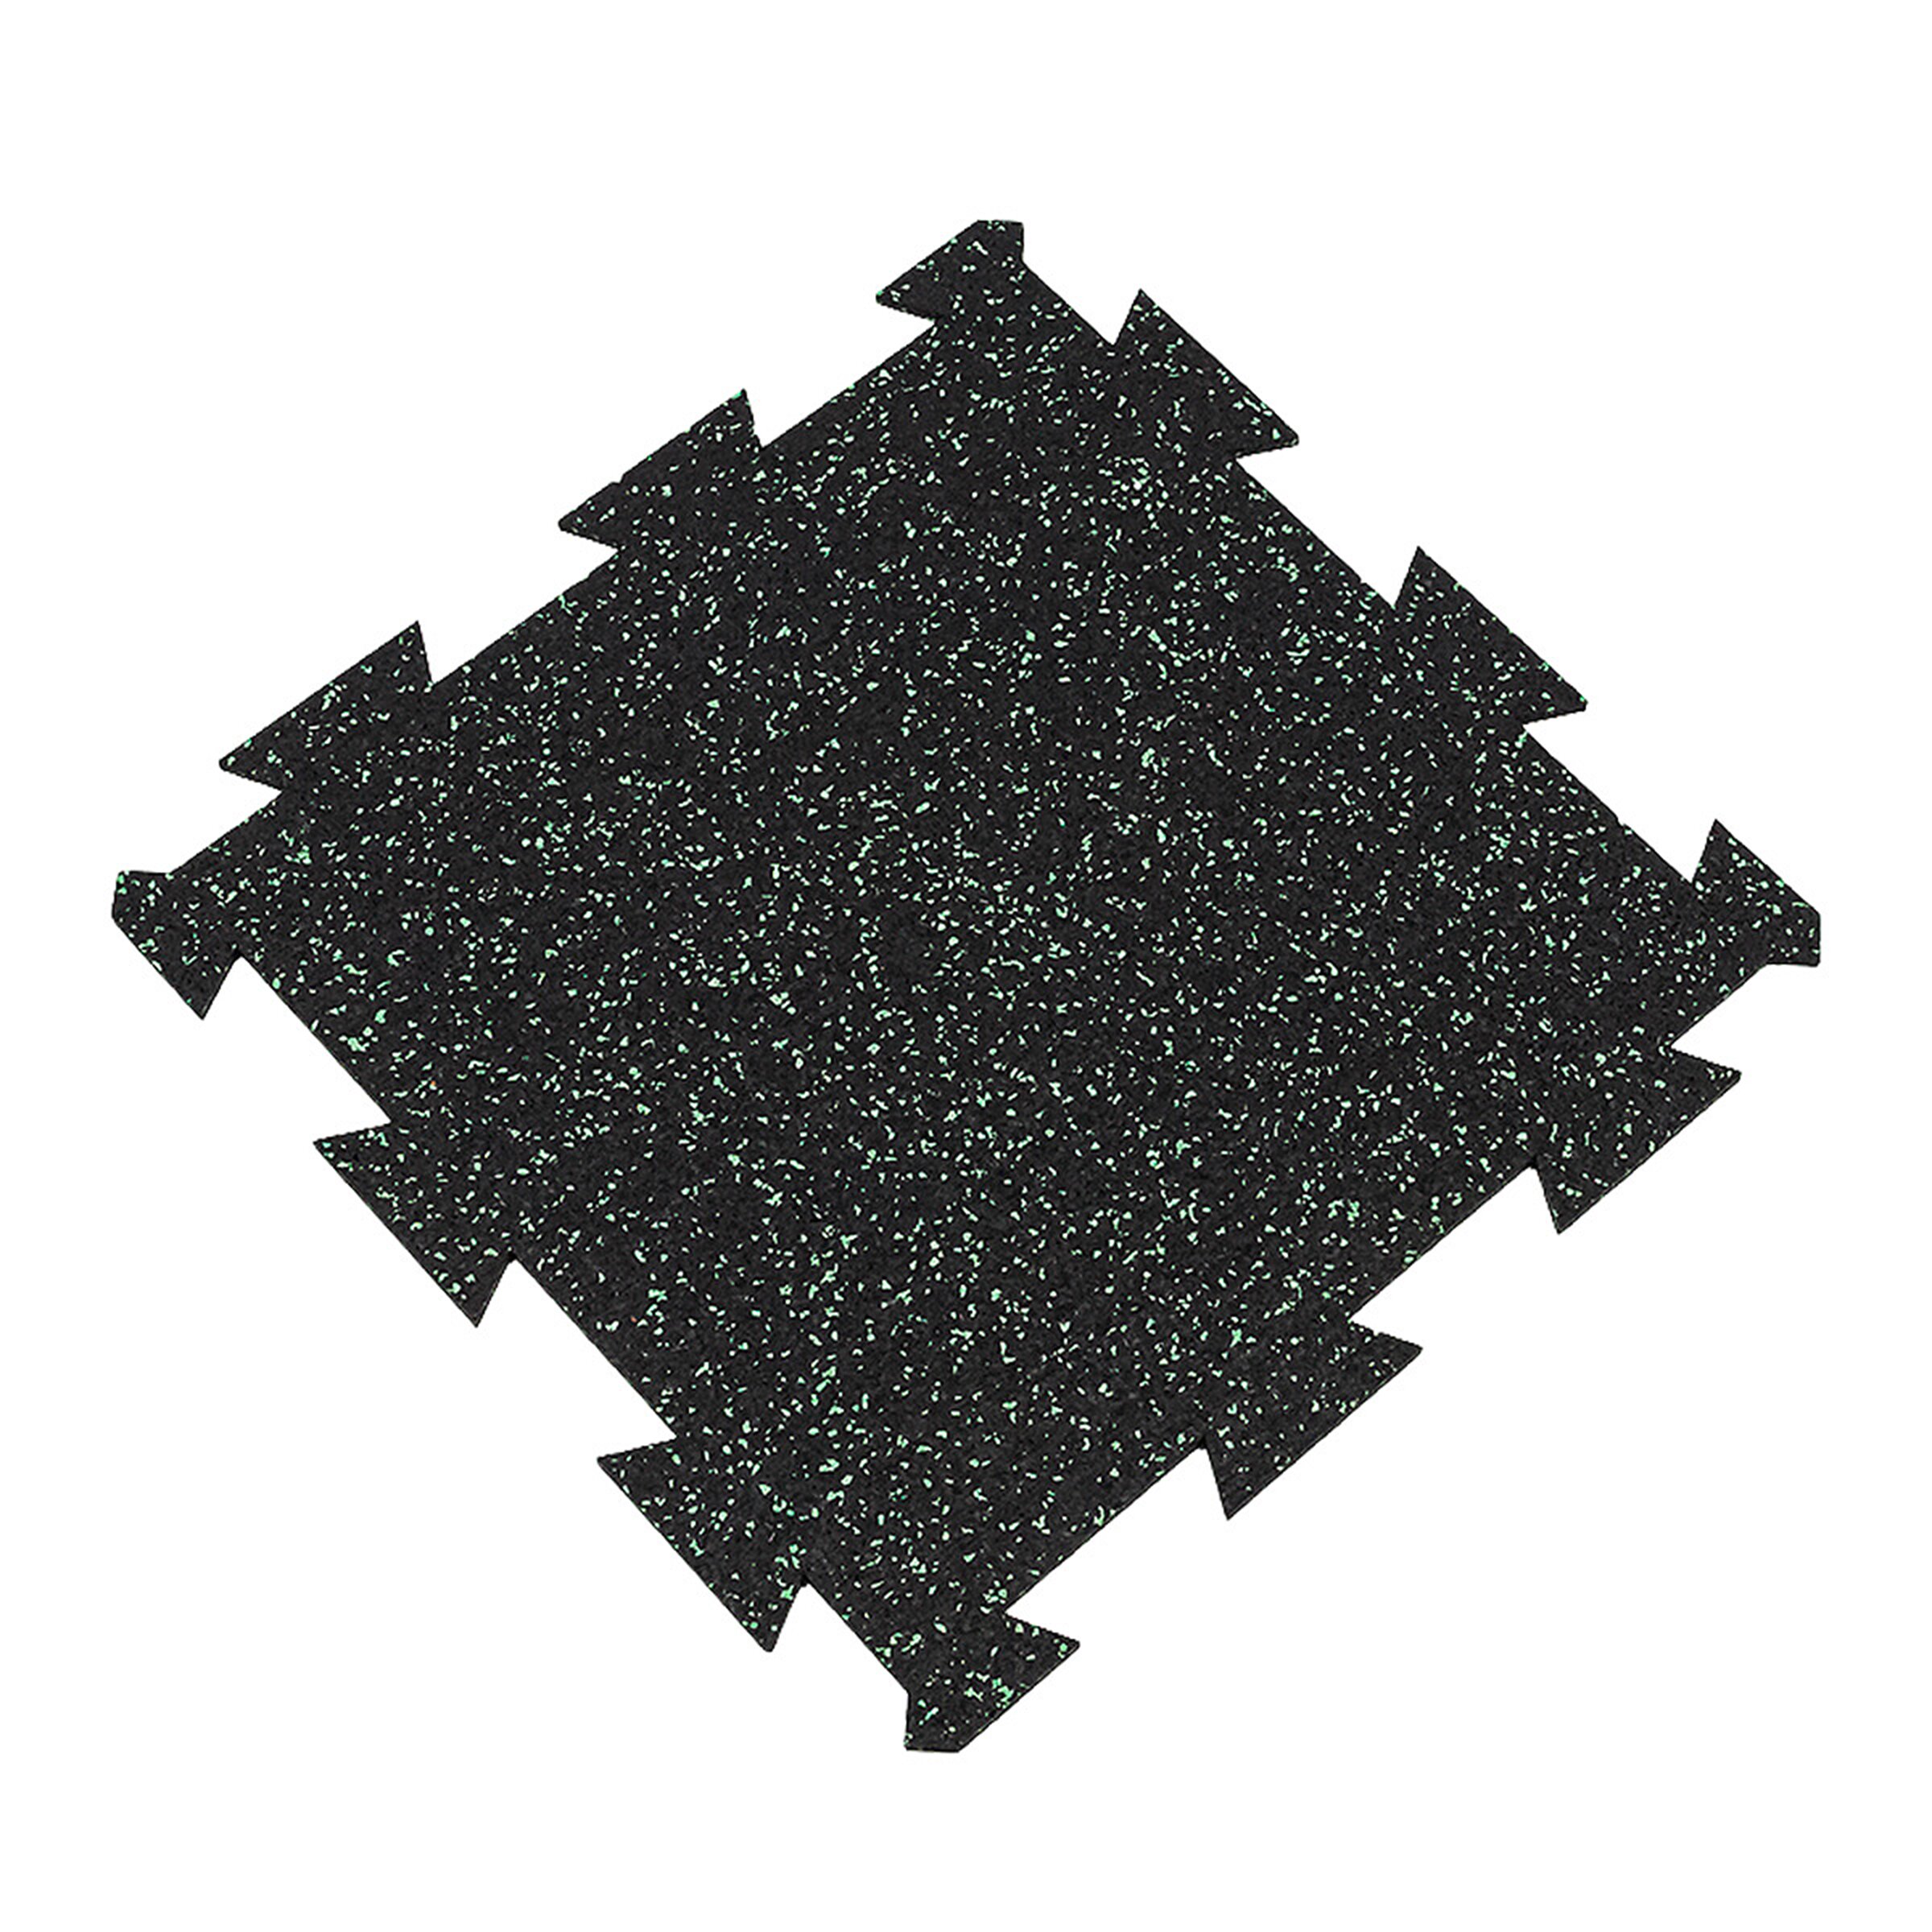 Černo-zelená gumová modulová puzzle dlažba (střed) FLOMA FitFlo SF1050 - délka 50 cm, šířka 50 cm, výška 1,6 cm